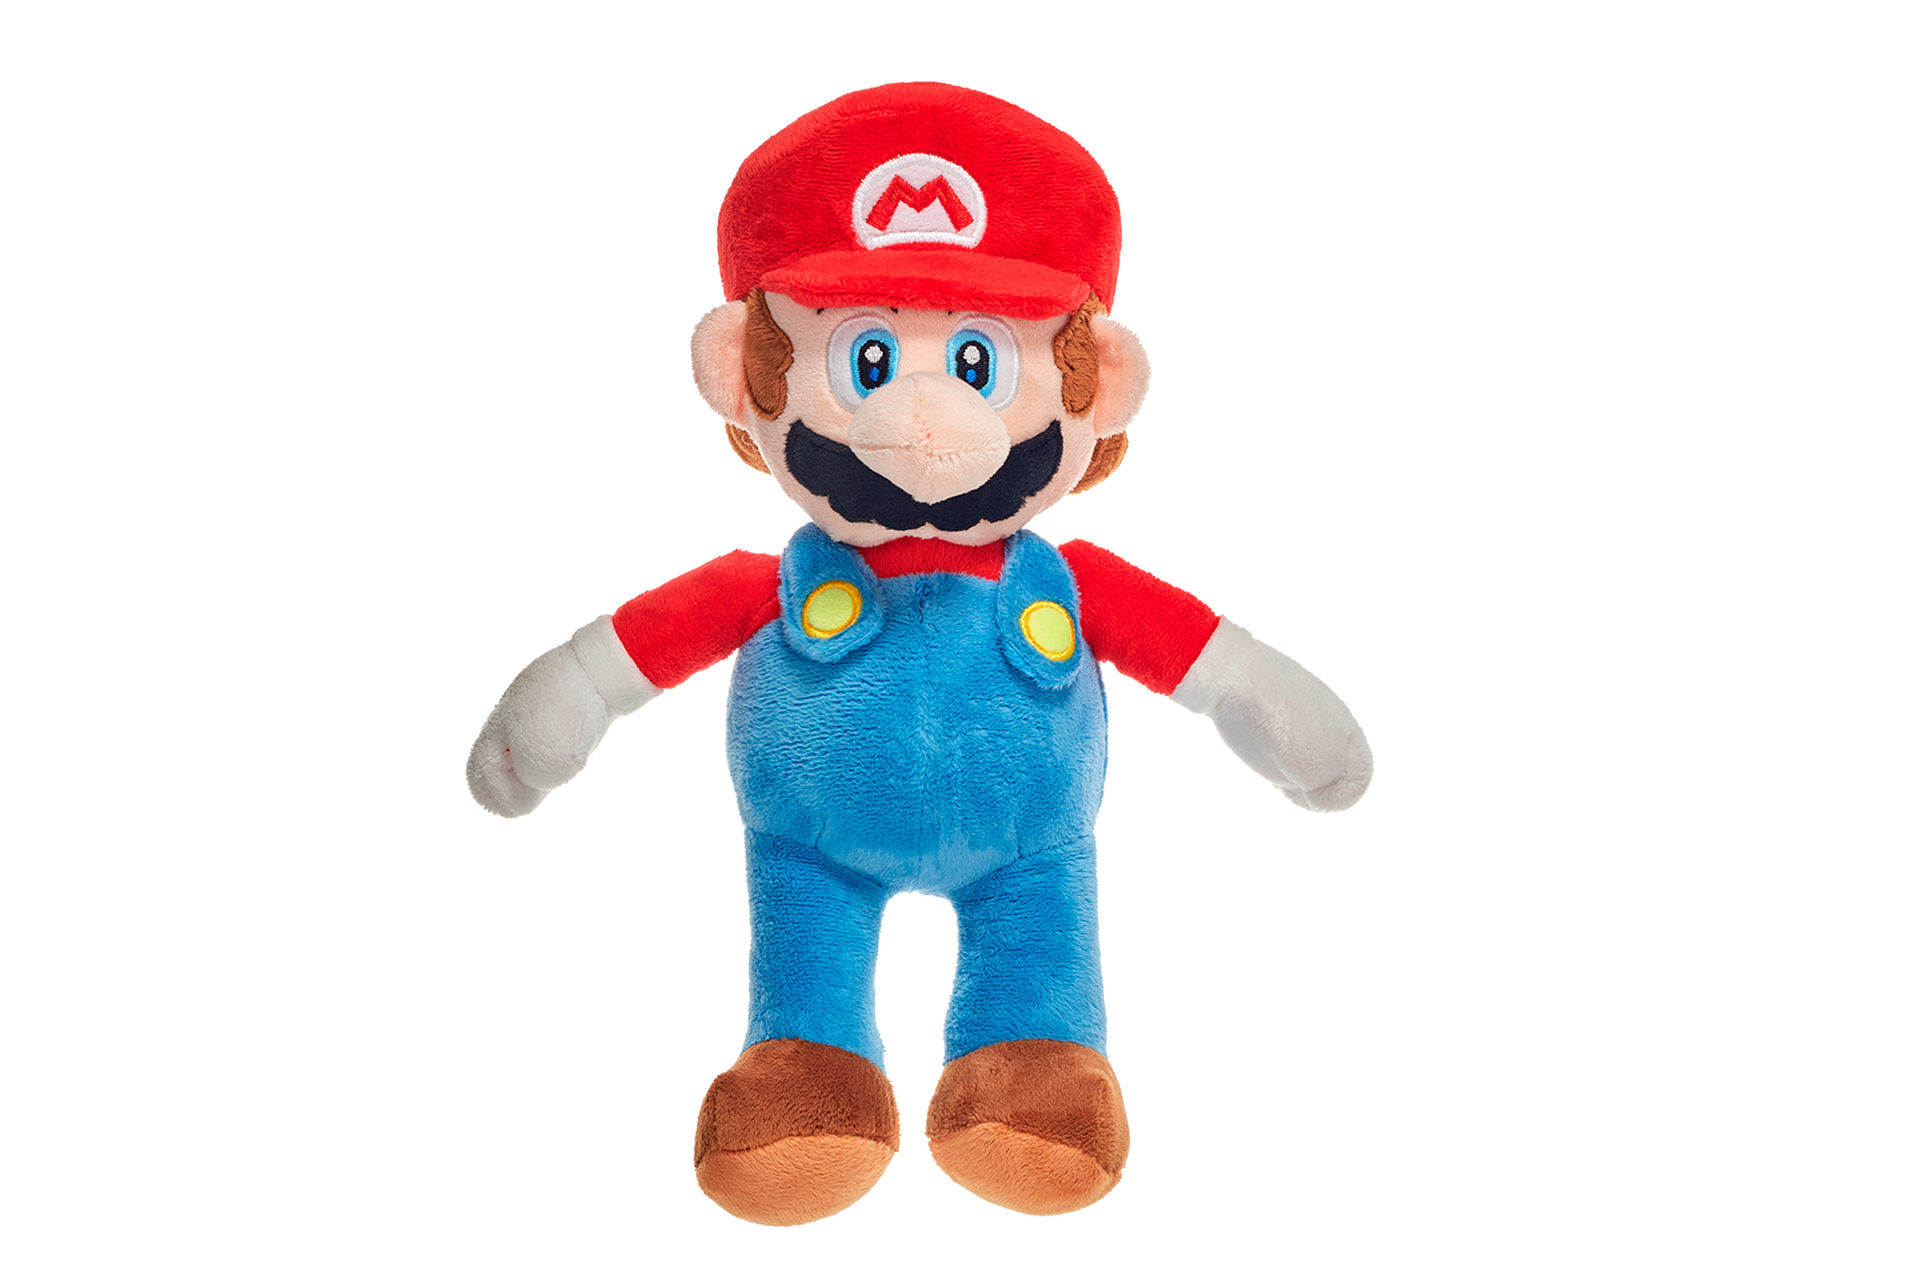 Peluche Mario Bros Jumbo Mario 30 cm